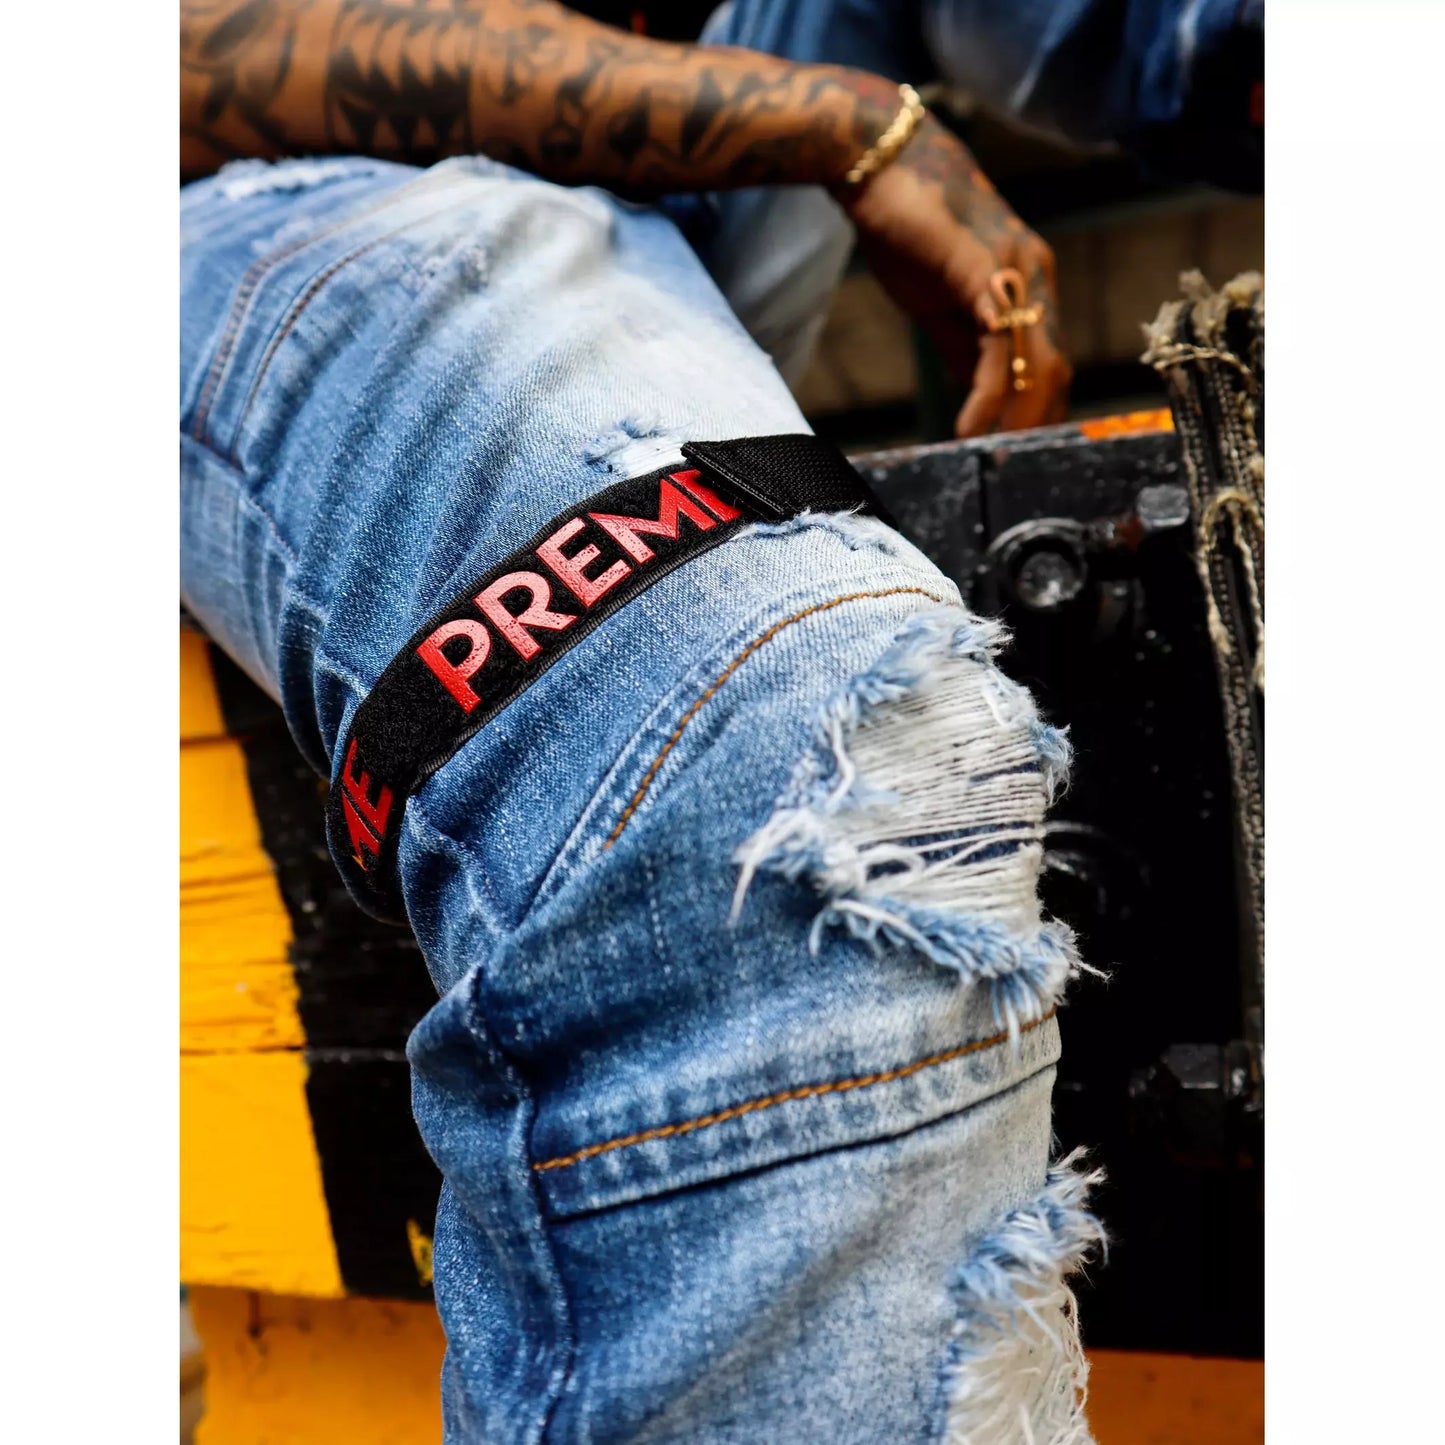 Preme Black-Red Strap Medium Indigo Denim Jeans (PR-WB-840)